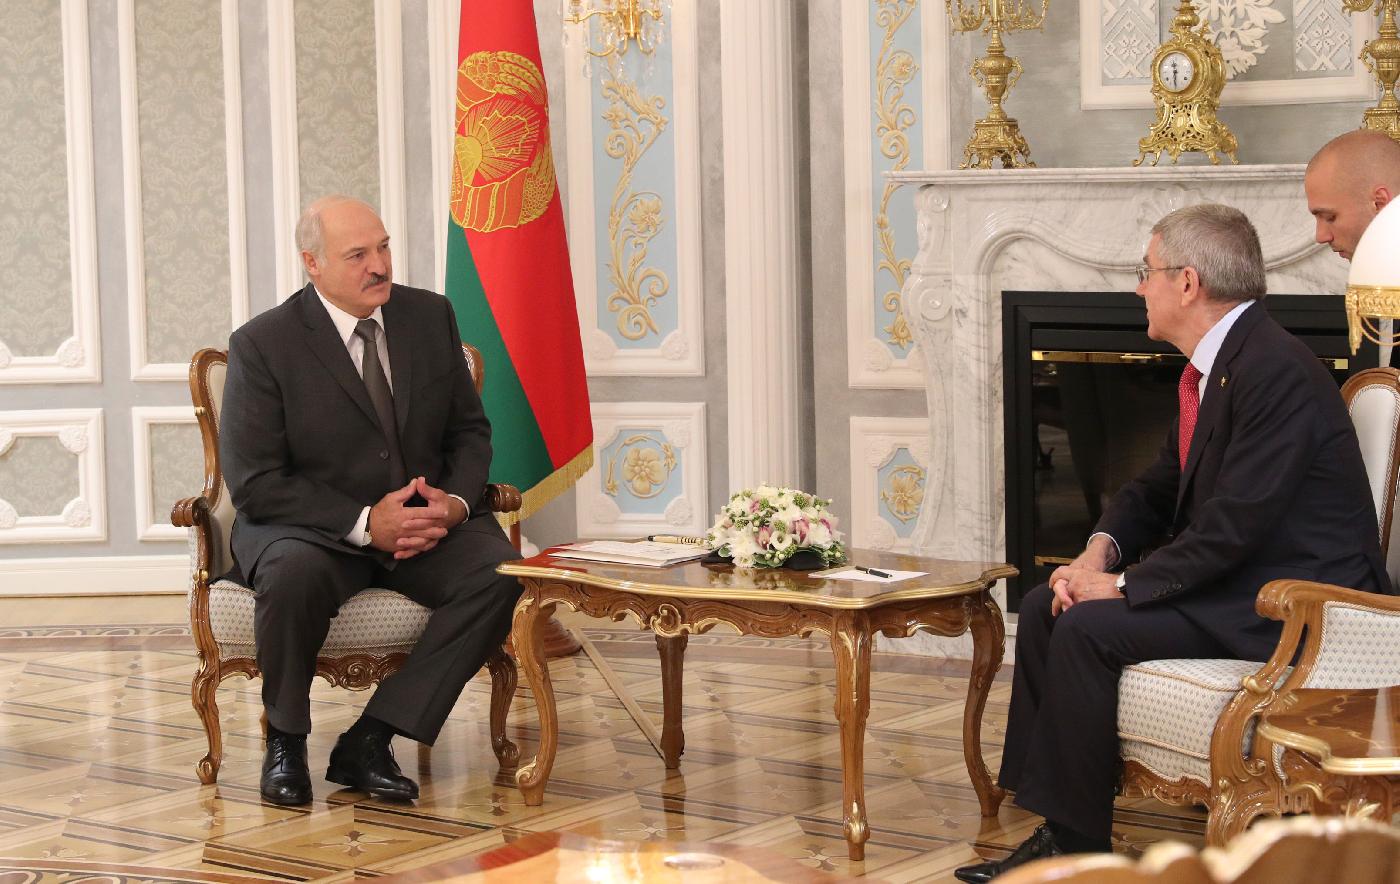 Лукашенко встретился с президентом Международного олимпийского комитета